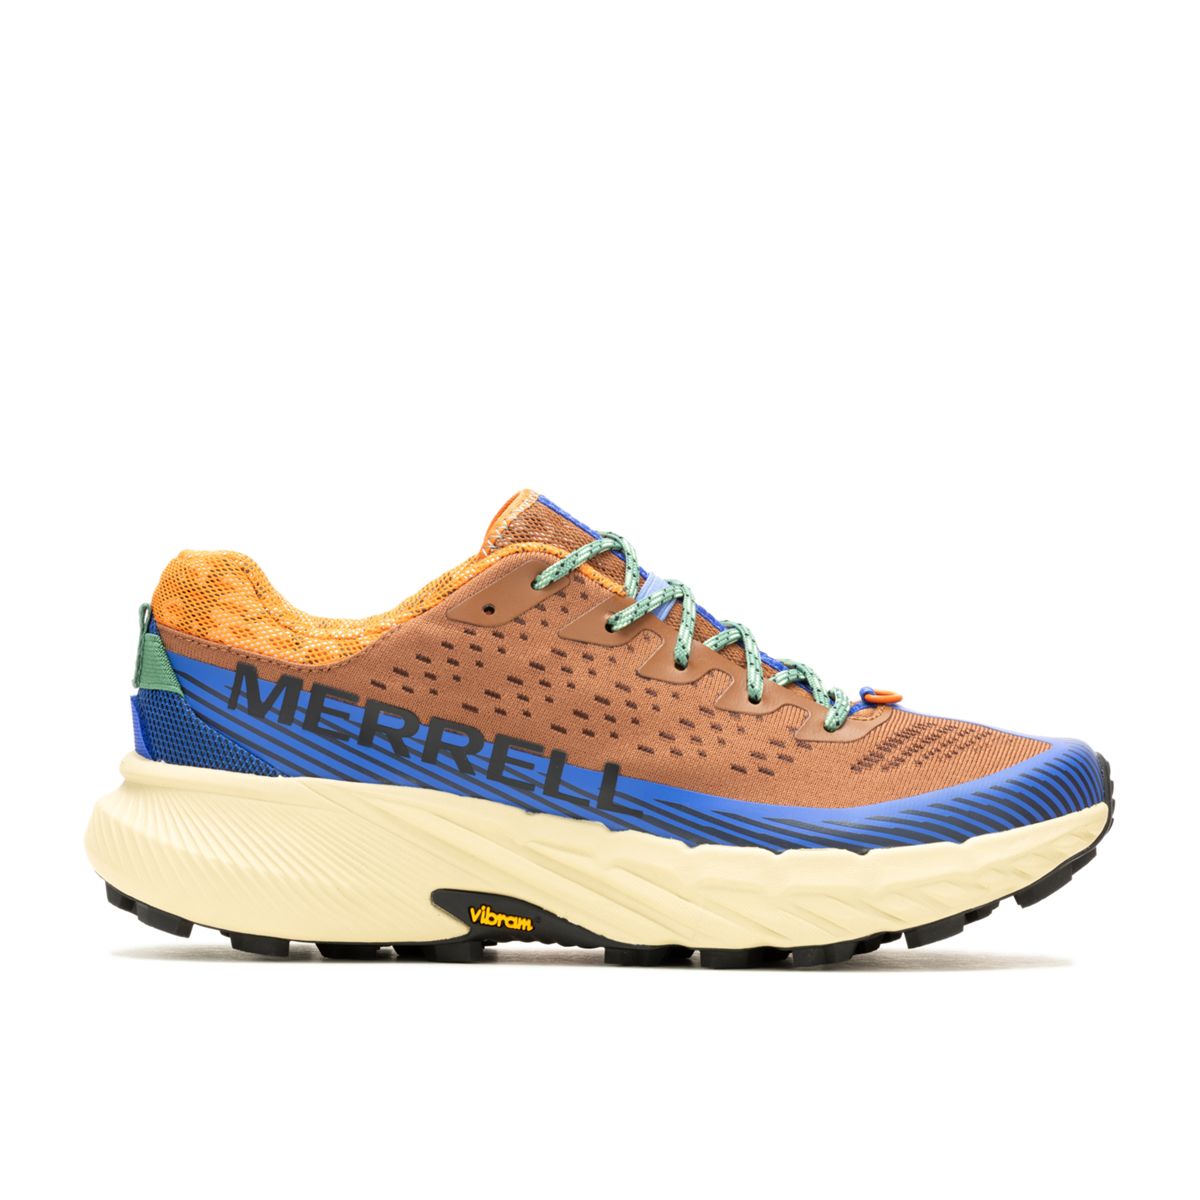 Merrell Barefoot Shoes partner with Vibram, slated for Spring 2011 -  BirthdayShoes